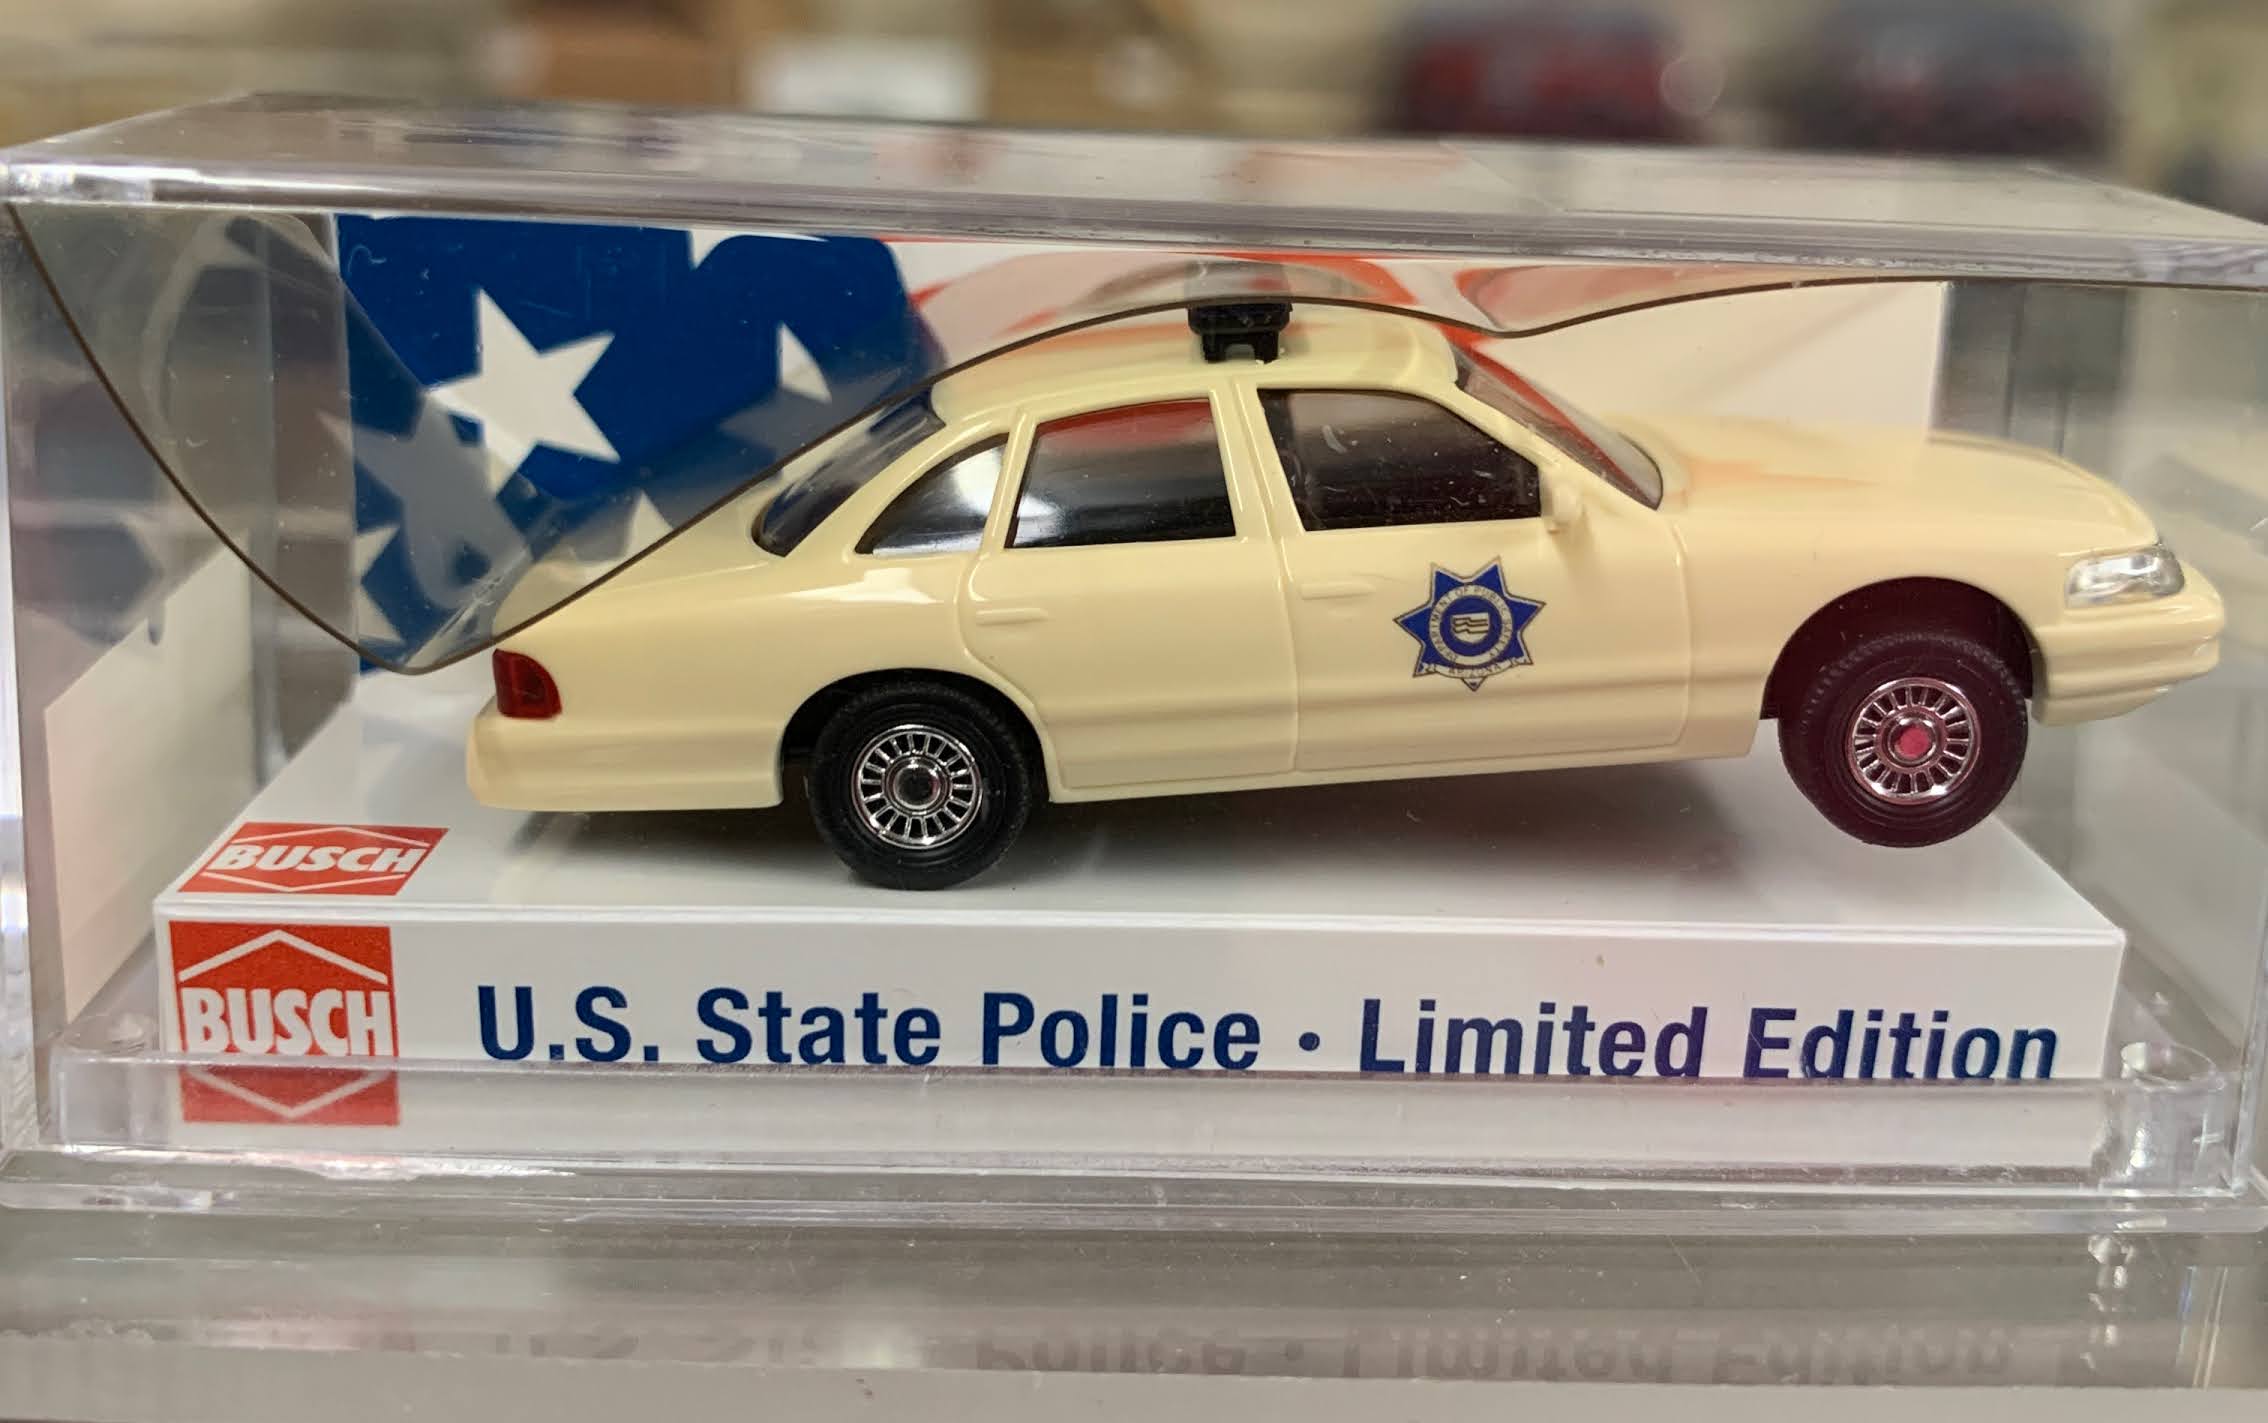 U.S. State Police Series - Arizona